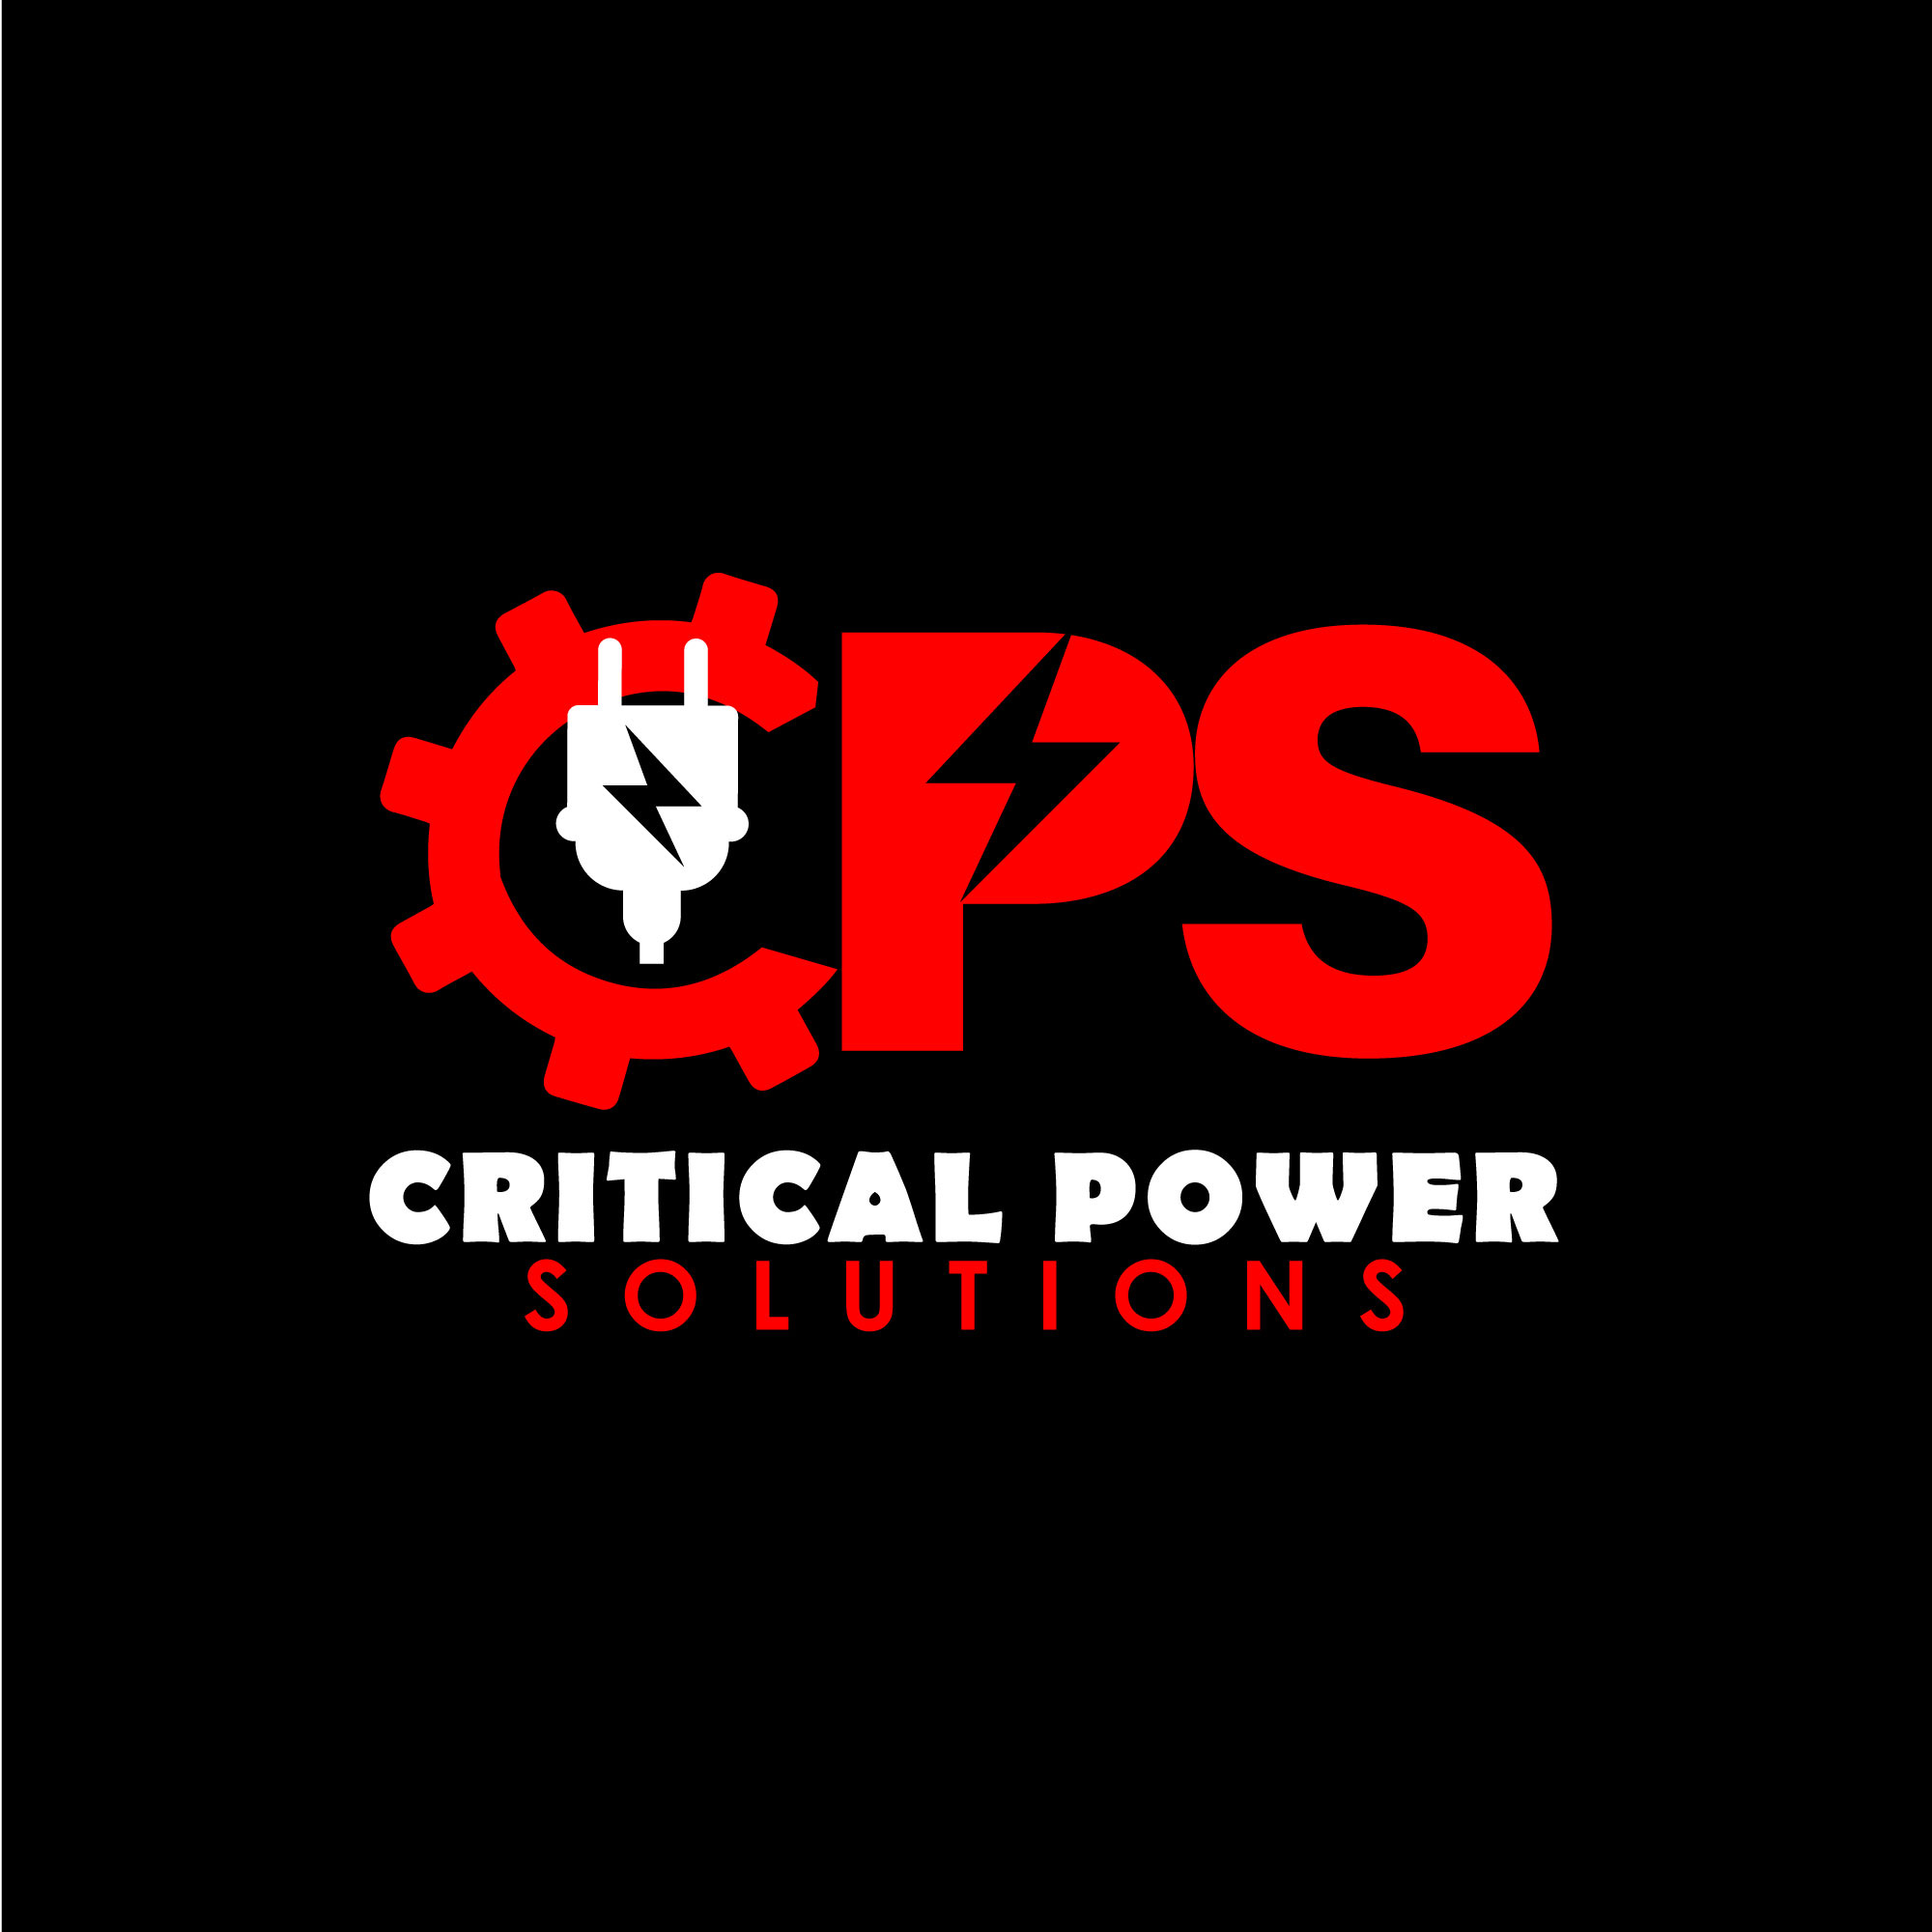 Critical Power Solutions - Cleveland, TN 37312 - (423)715-4754 | ShowMeLocal.com